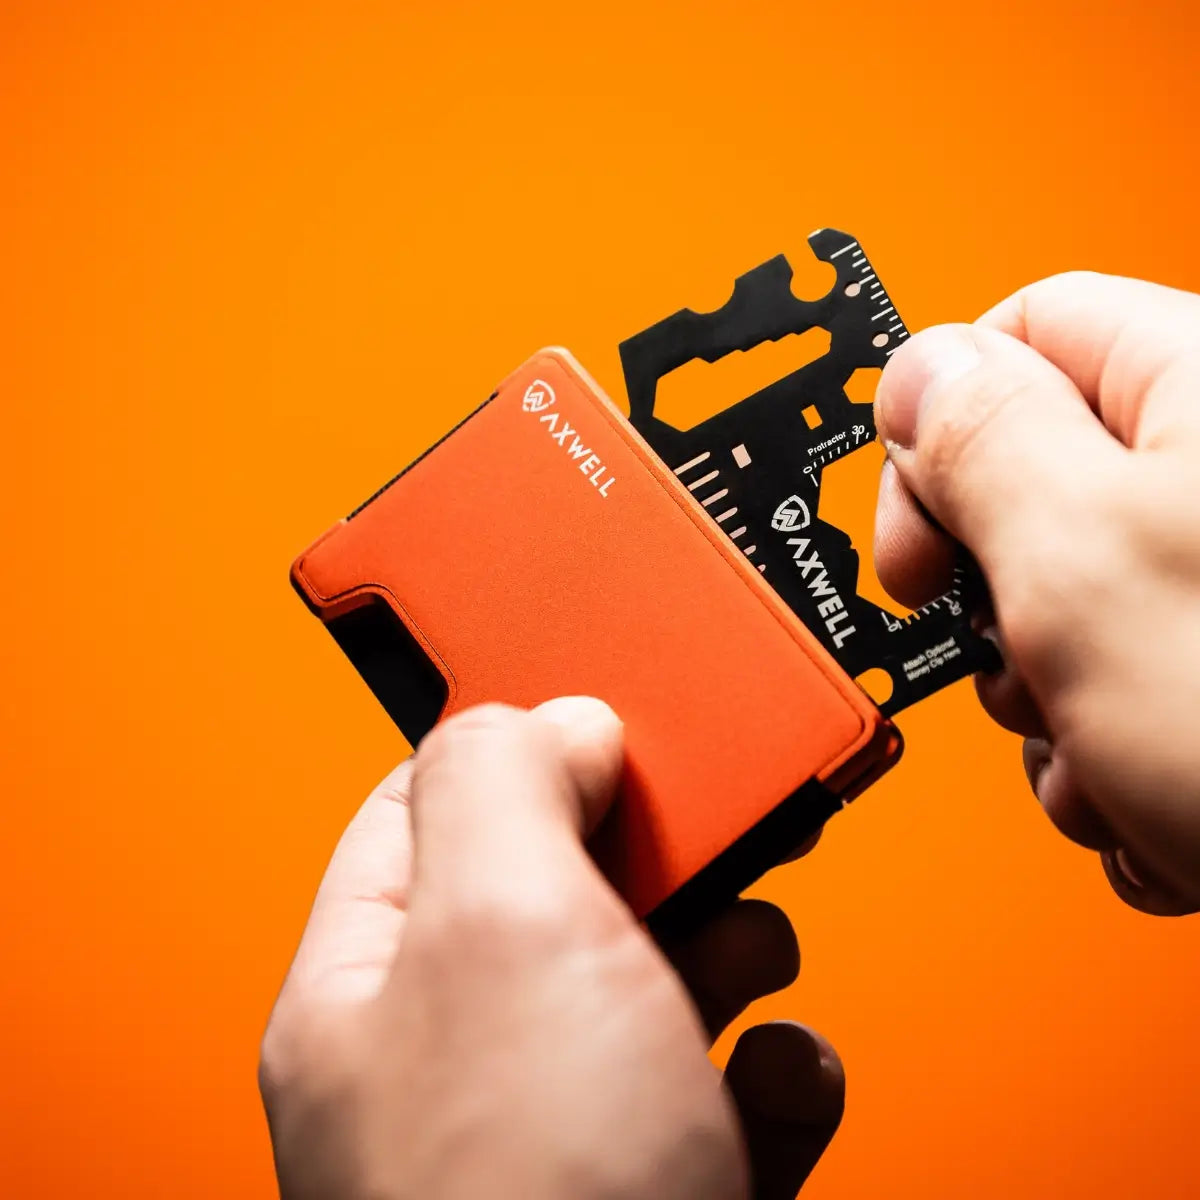 Wallet Multitool Bundle - Blaze Orange